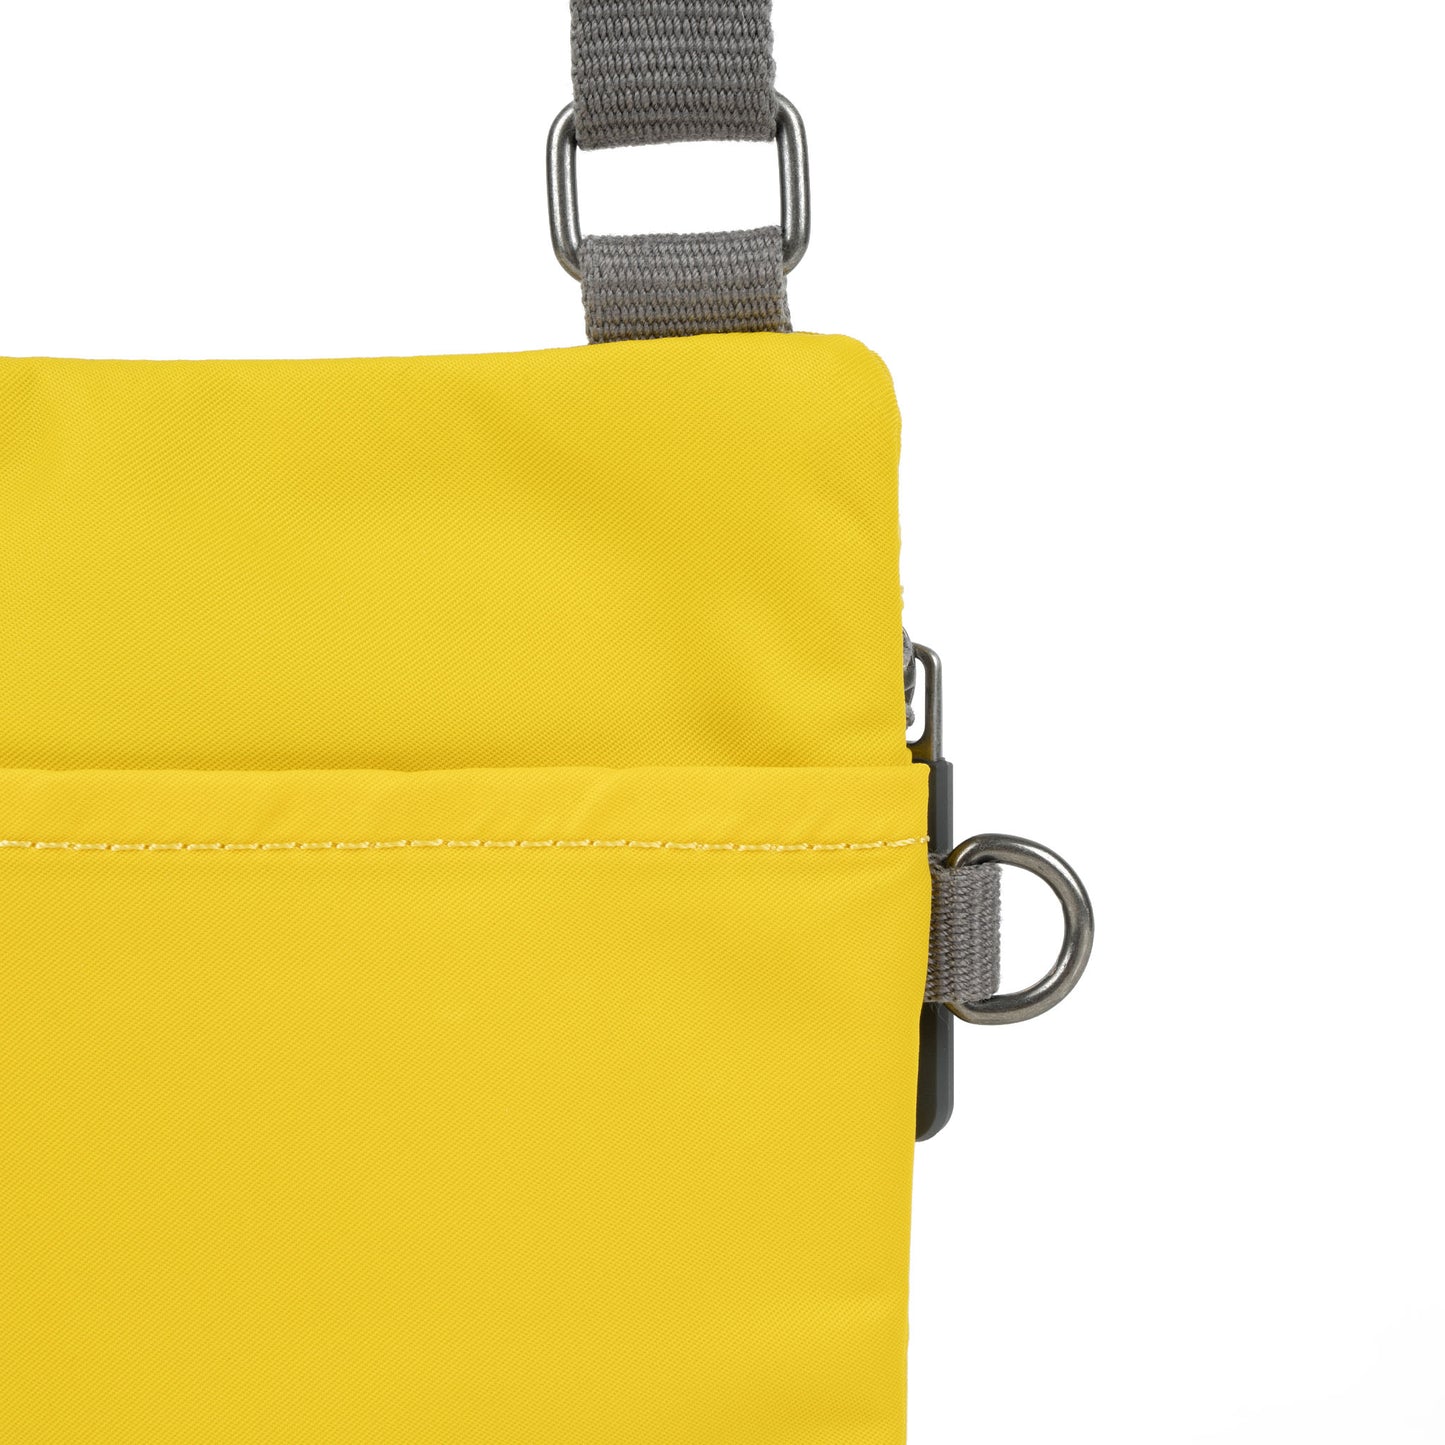 Roka London Chelsea Crossbody Phone Bag, Mustard (Recycled Nylon)